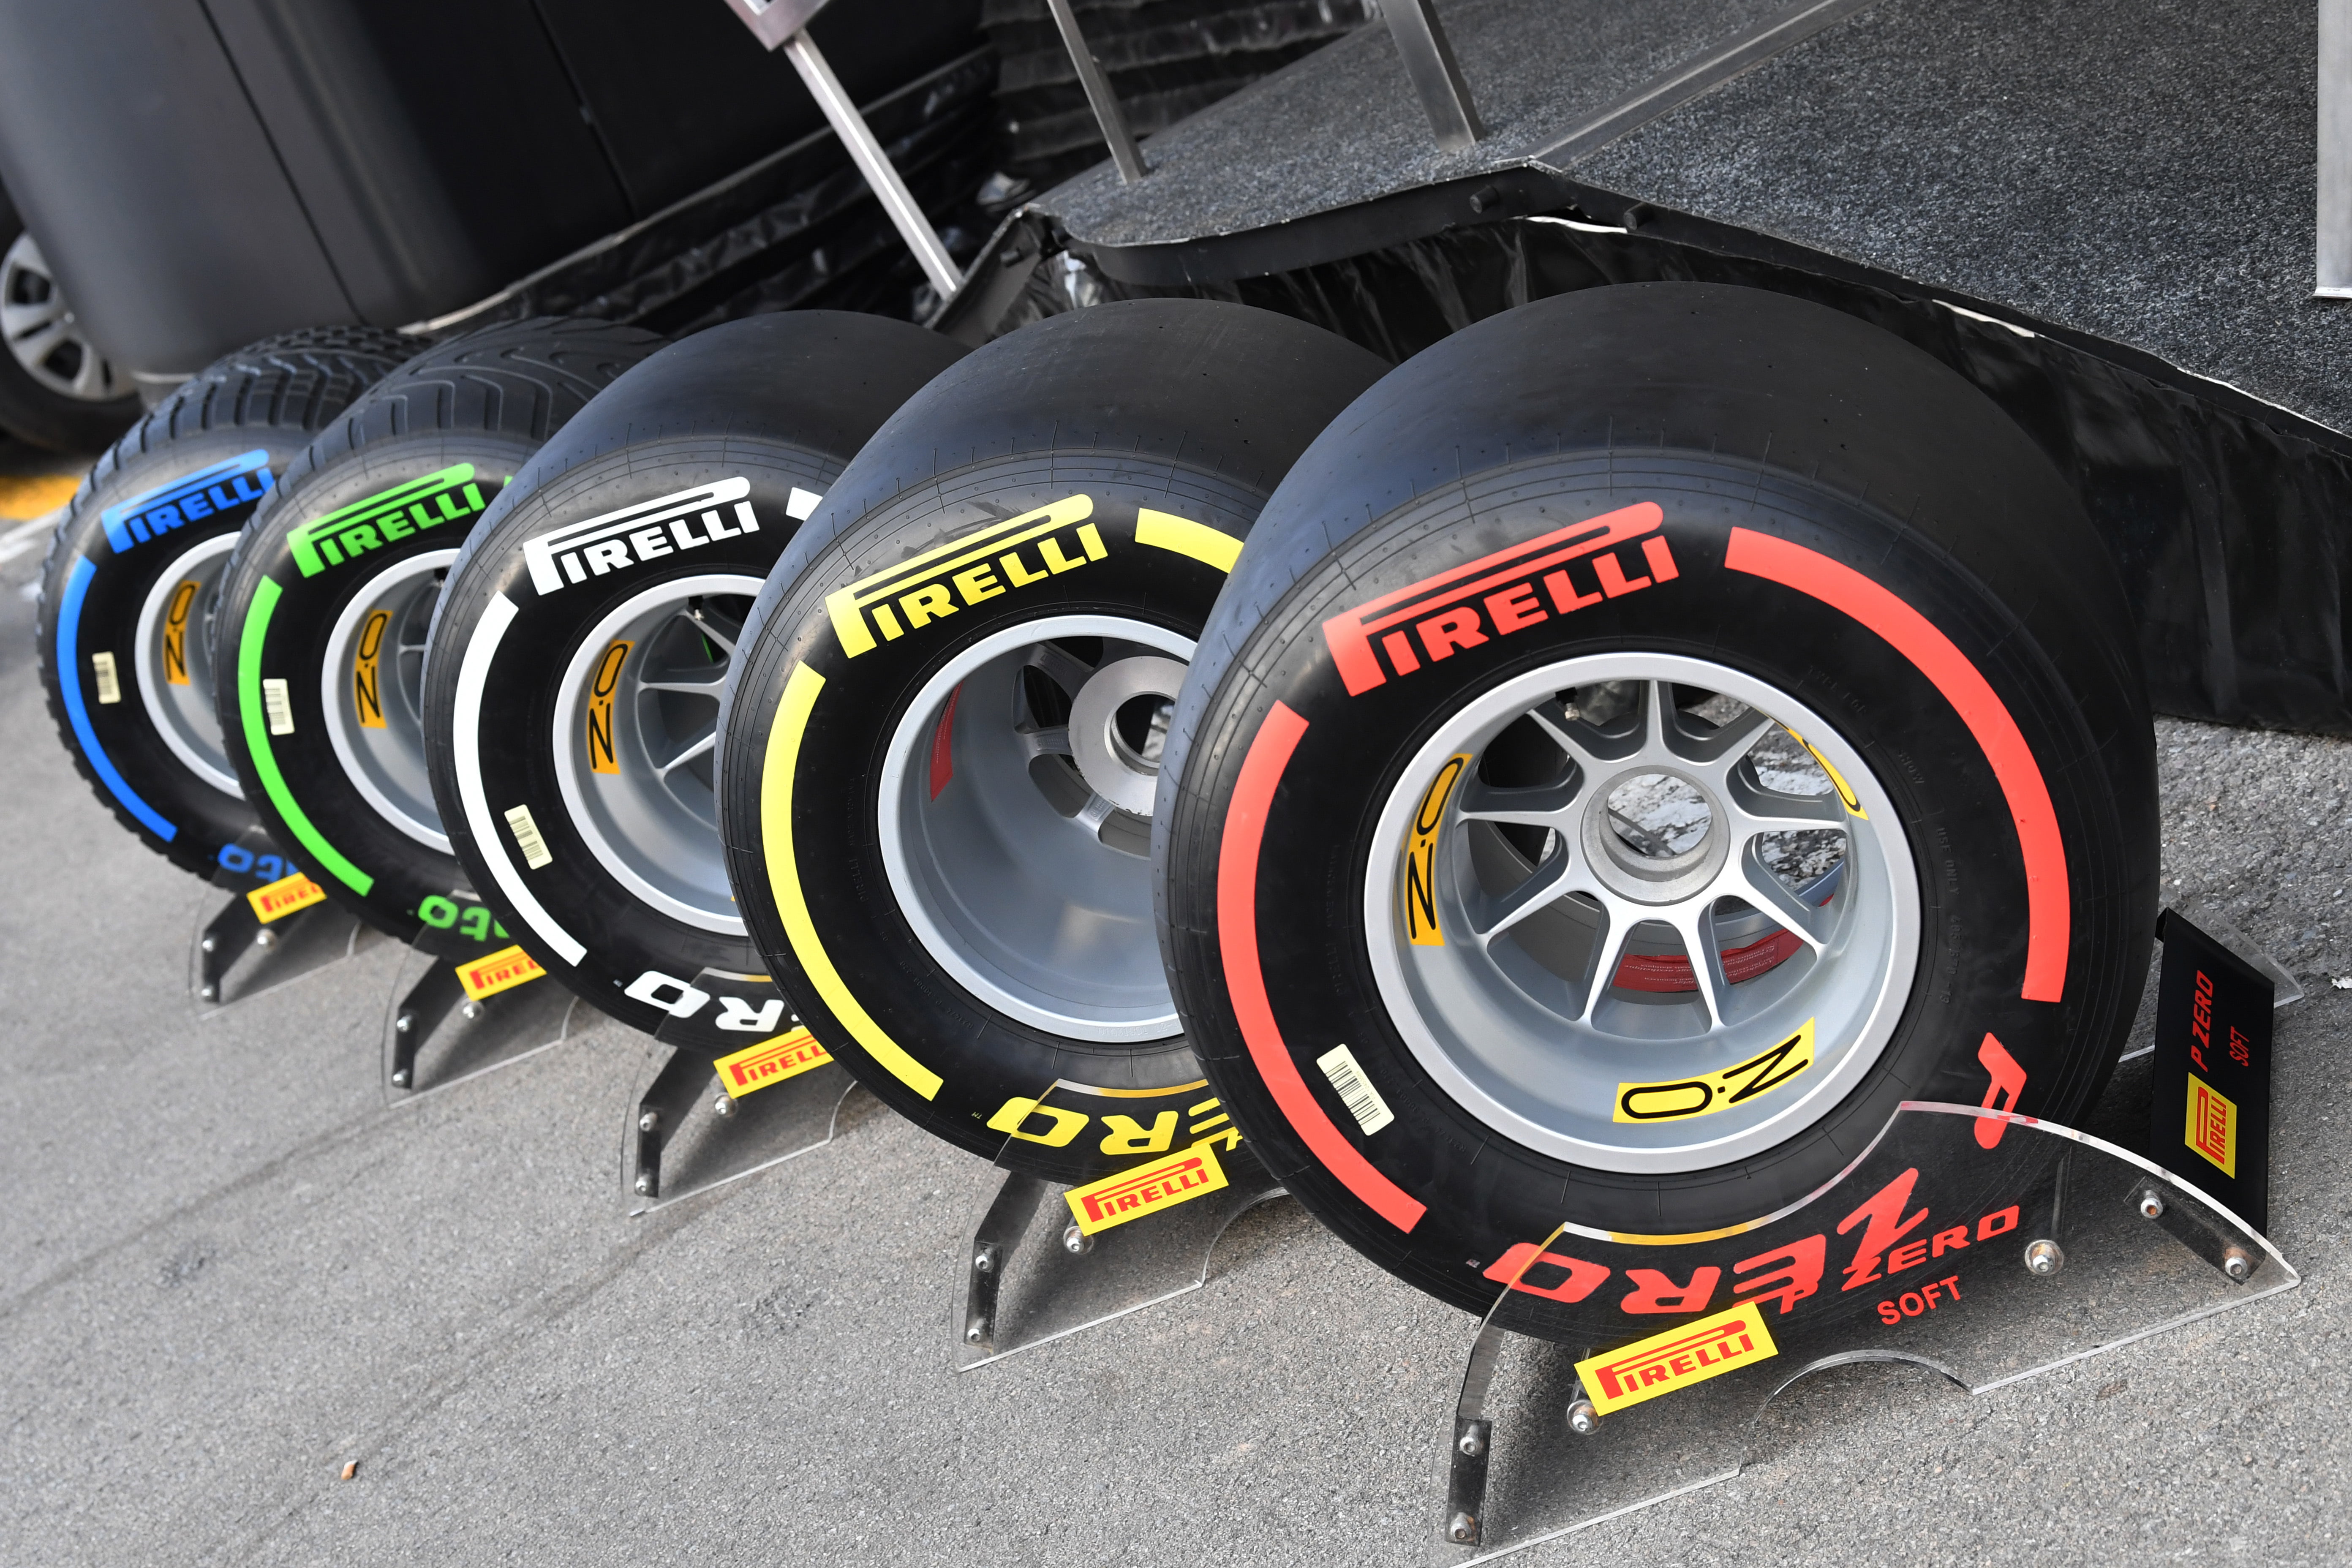 Verdeelstuk groei vloeistof Teams unaniem tegen nieuwe Pirelli-banden voor 2020 - Formule1.nl